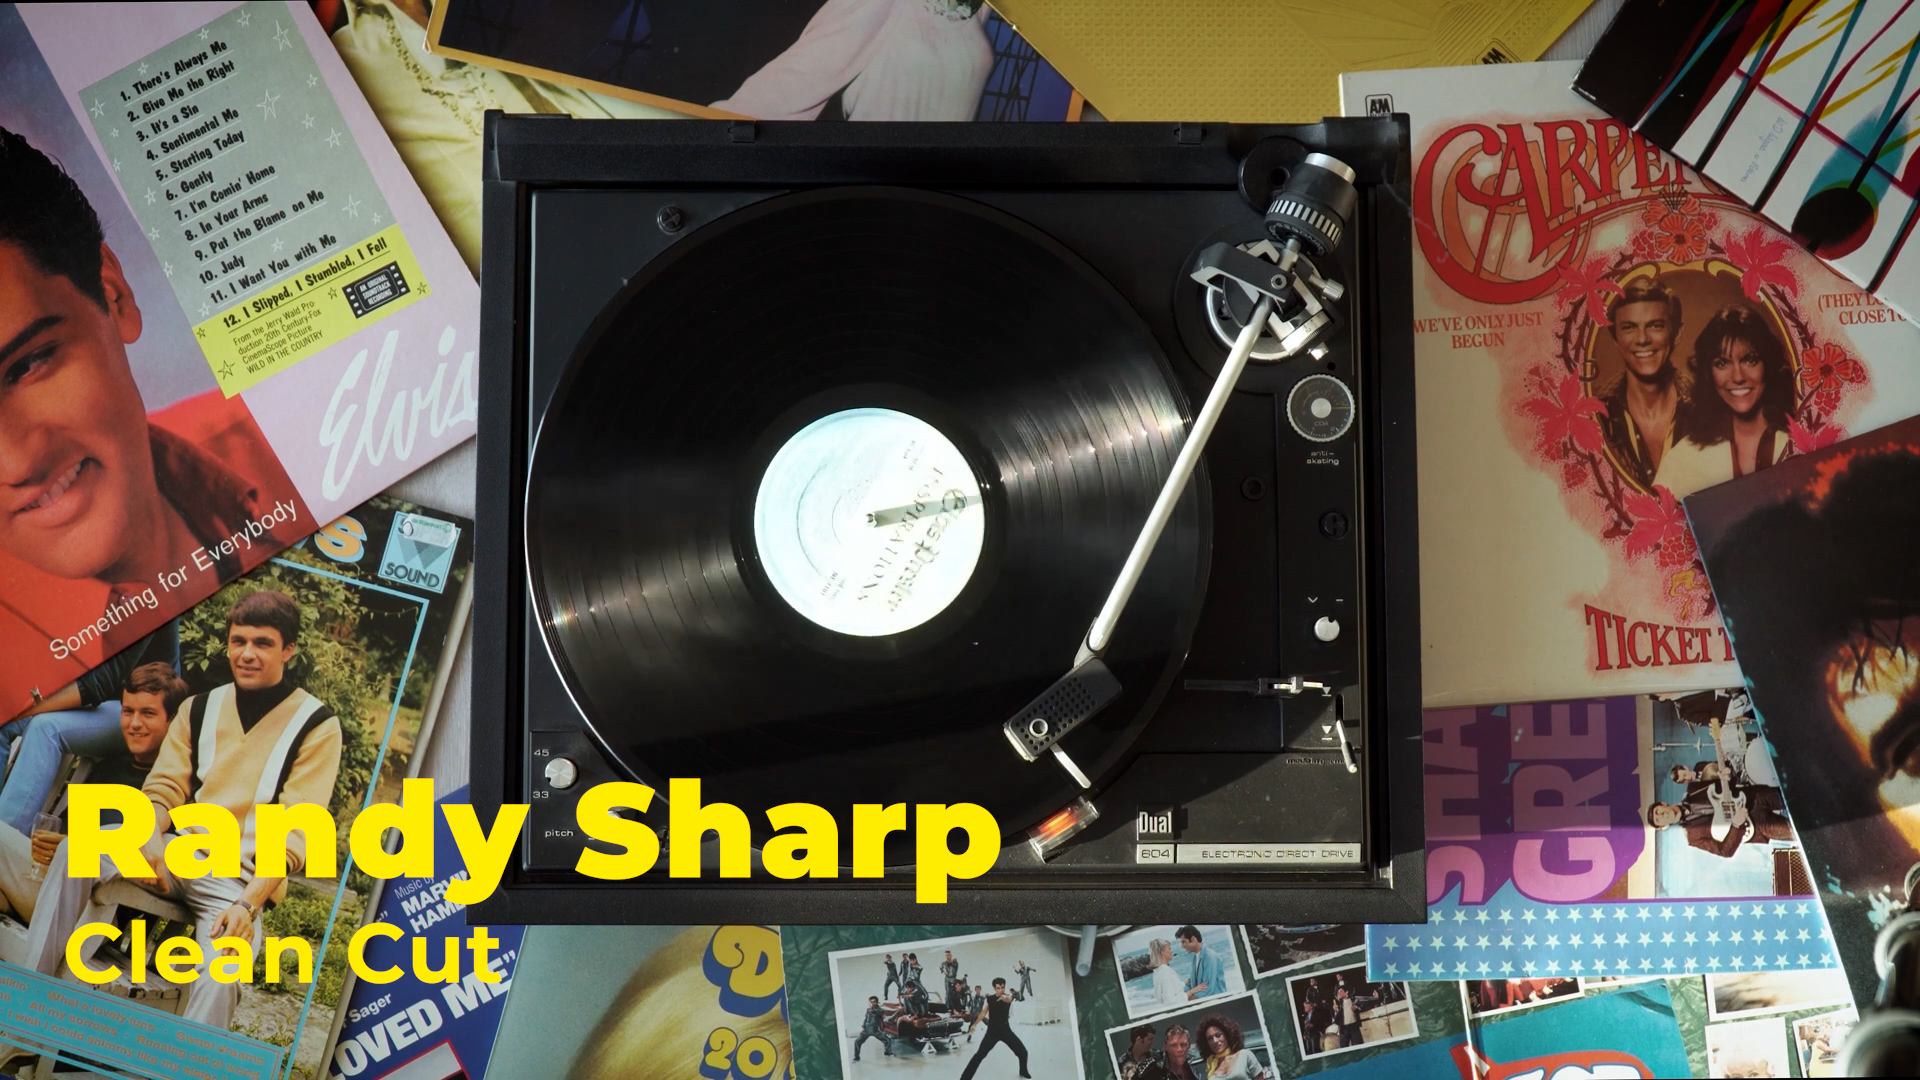 Randy Sharp - Clean Cut (Electronic,Pop,Lounge)
Музыка без авторских прав
No Copyright Music